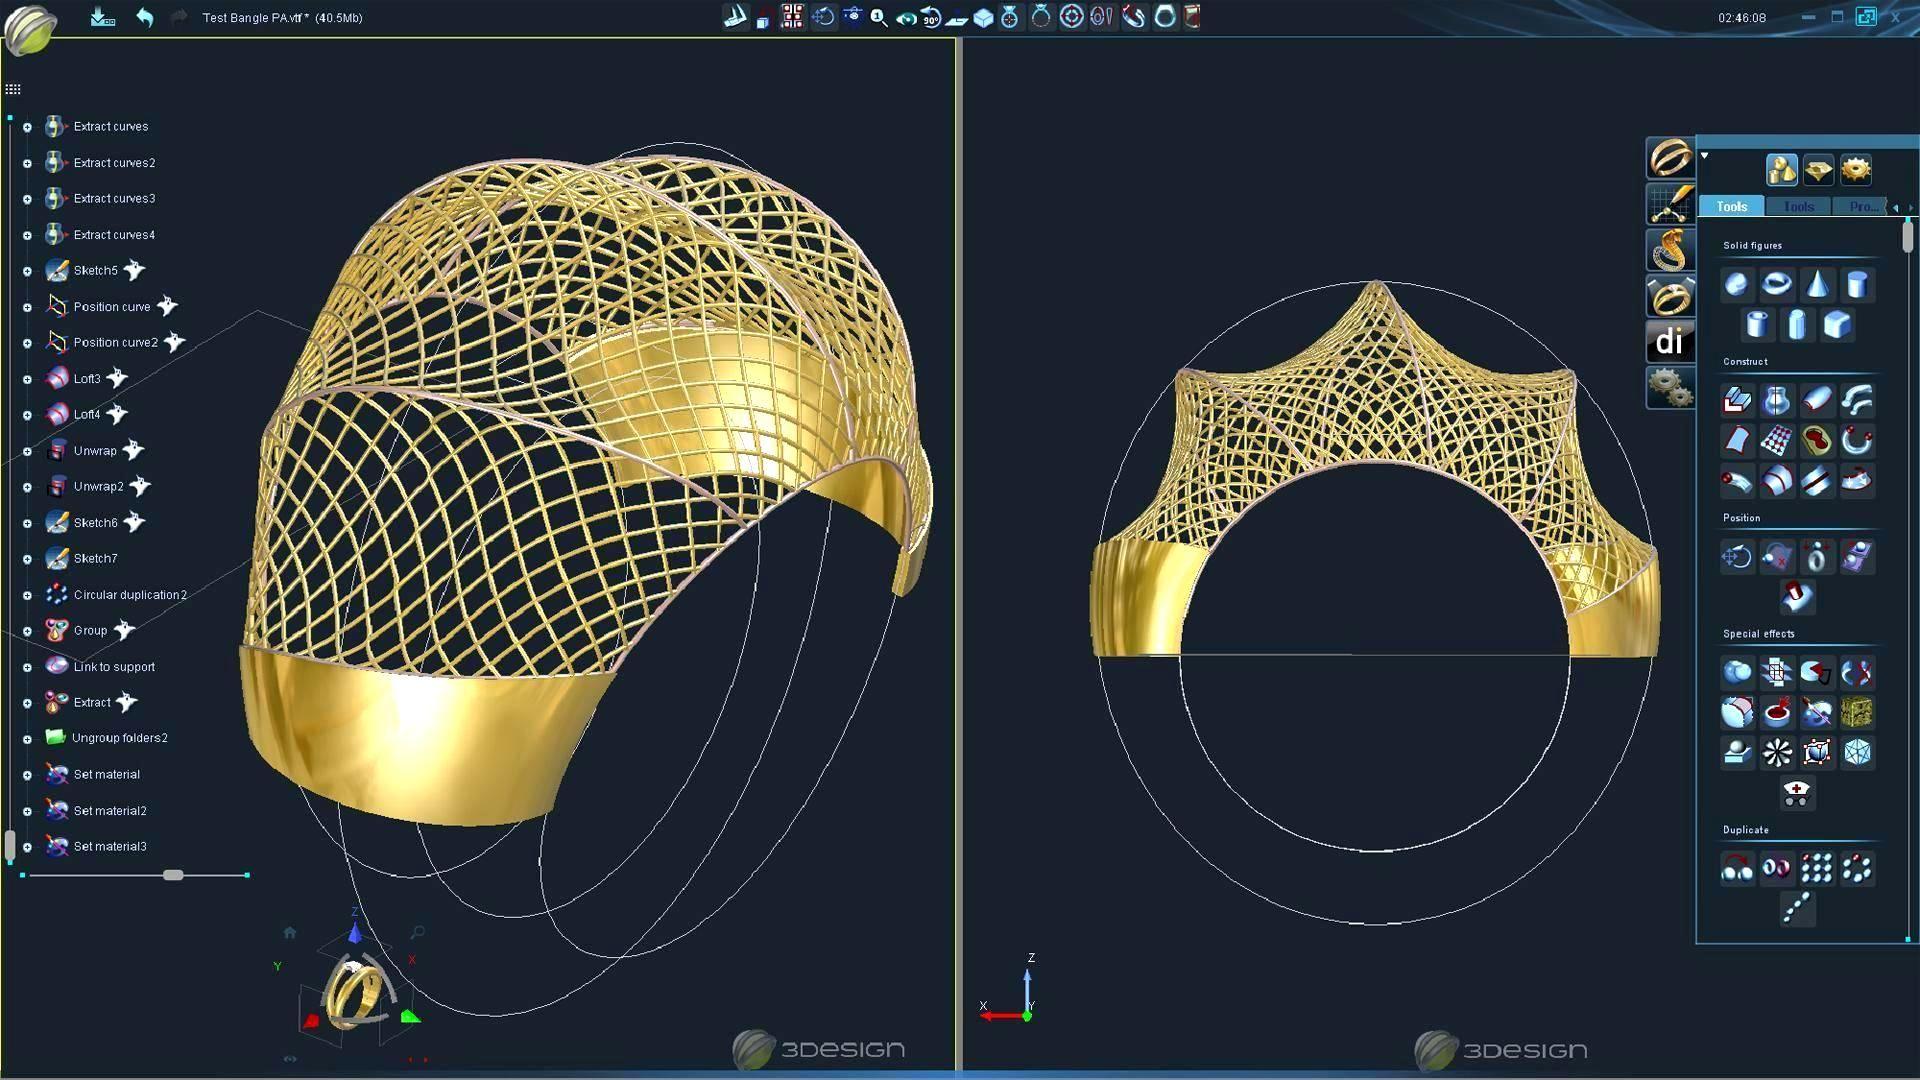 3Design interface : bangle design